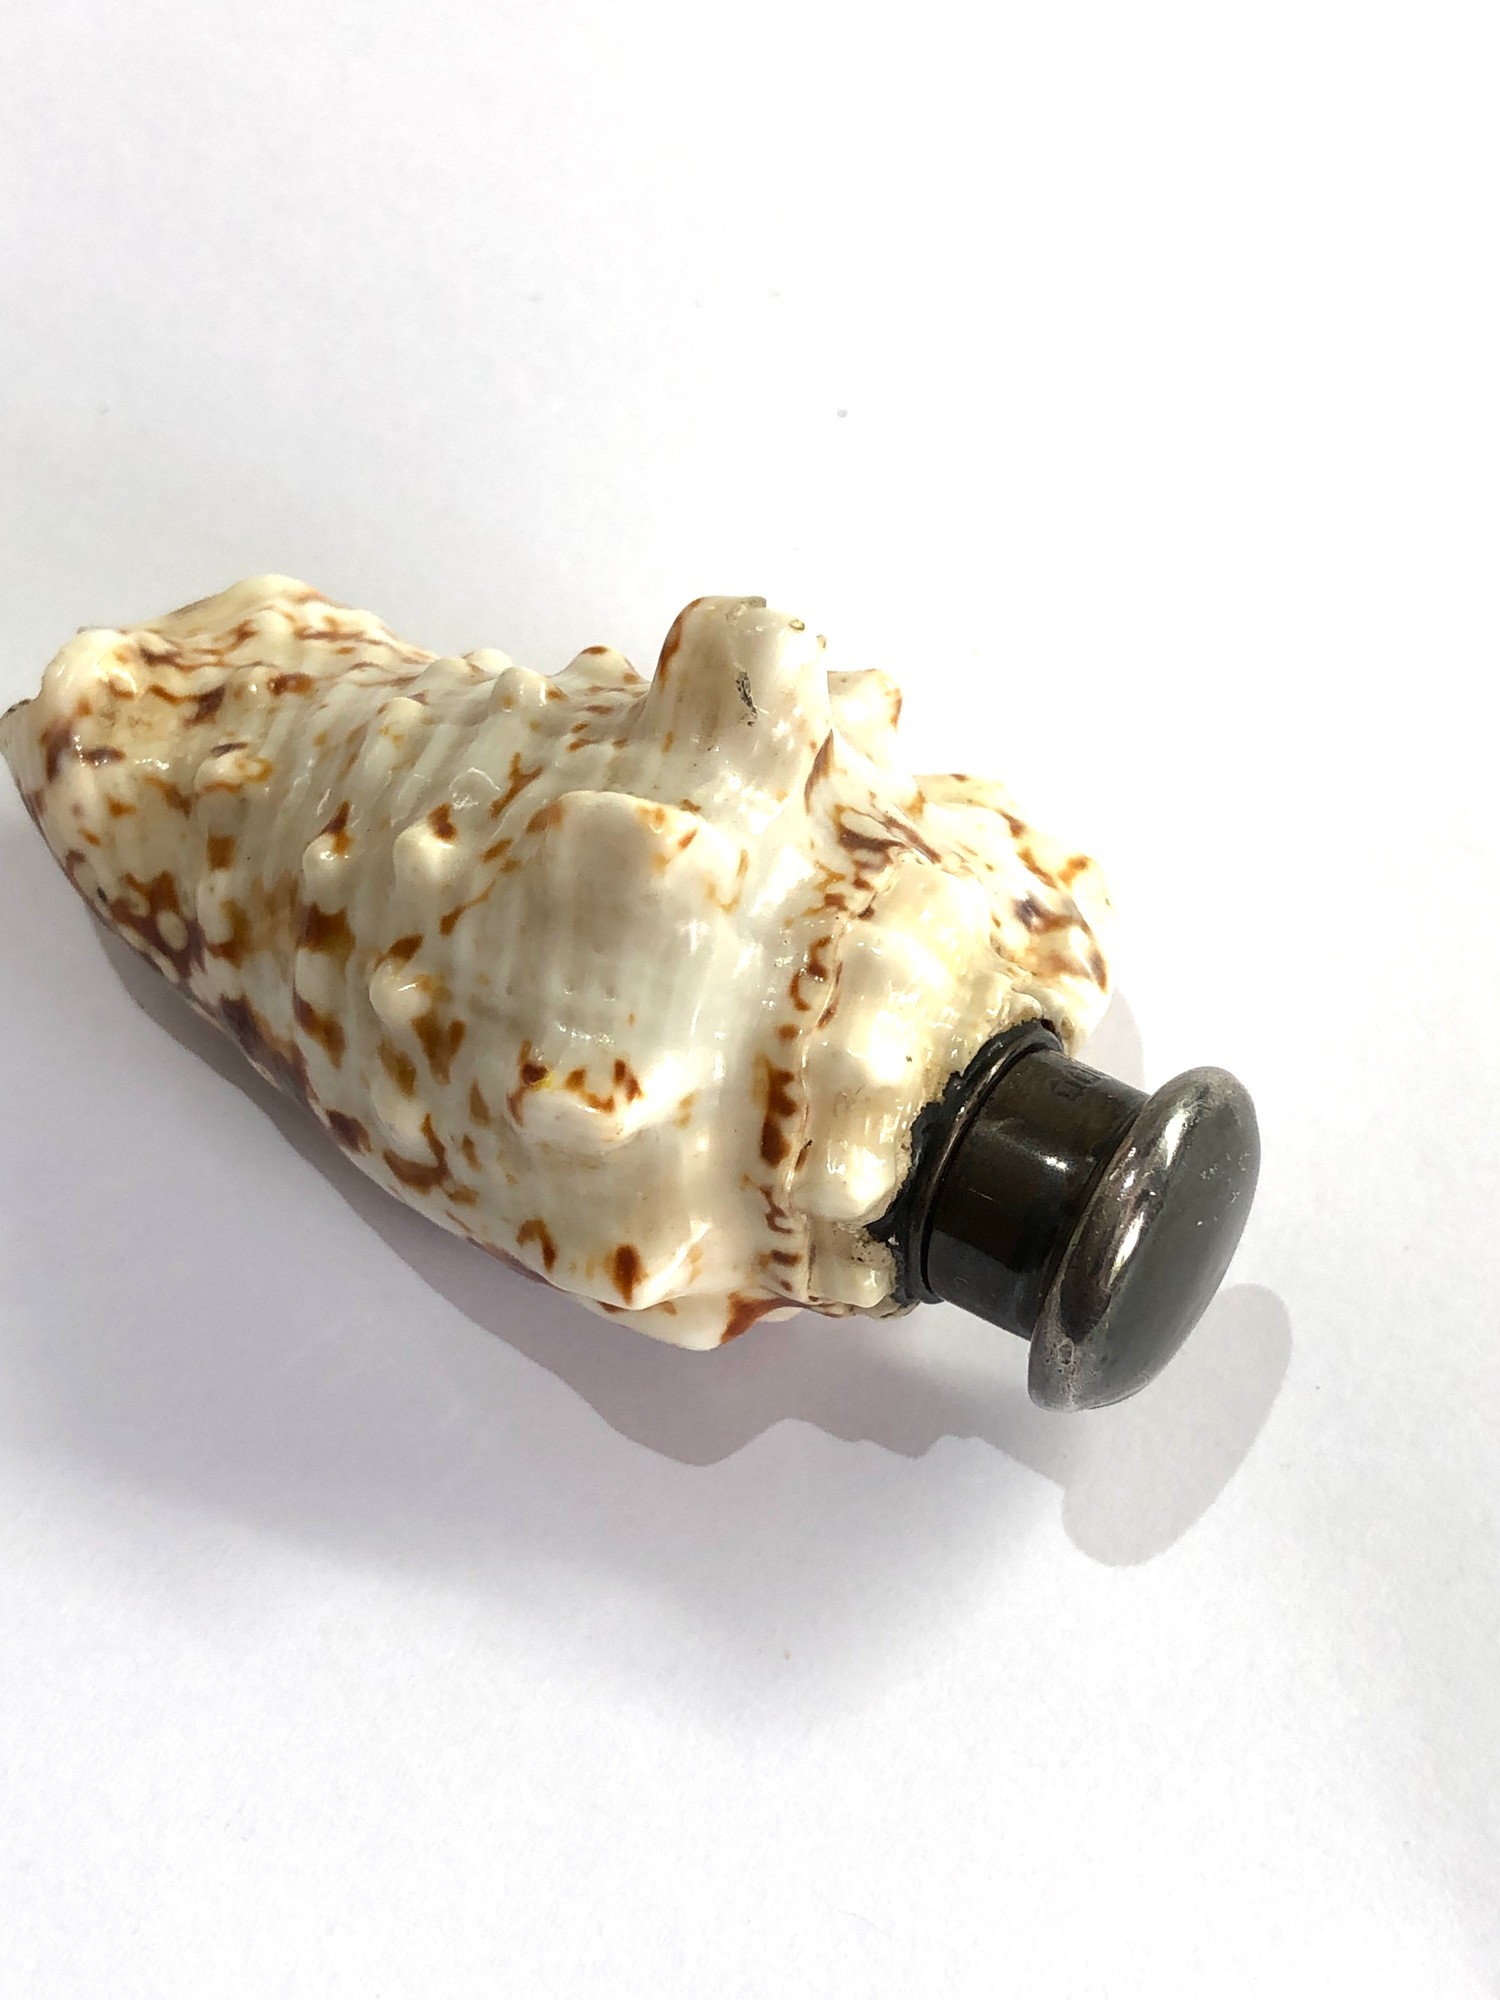 Antique samson morden silver mounted seashell scent bottle - Image 2 of 4